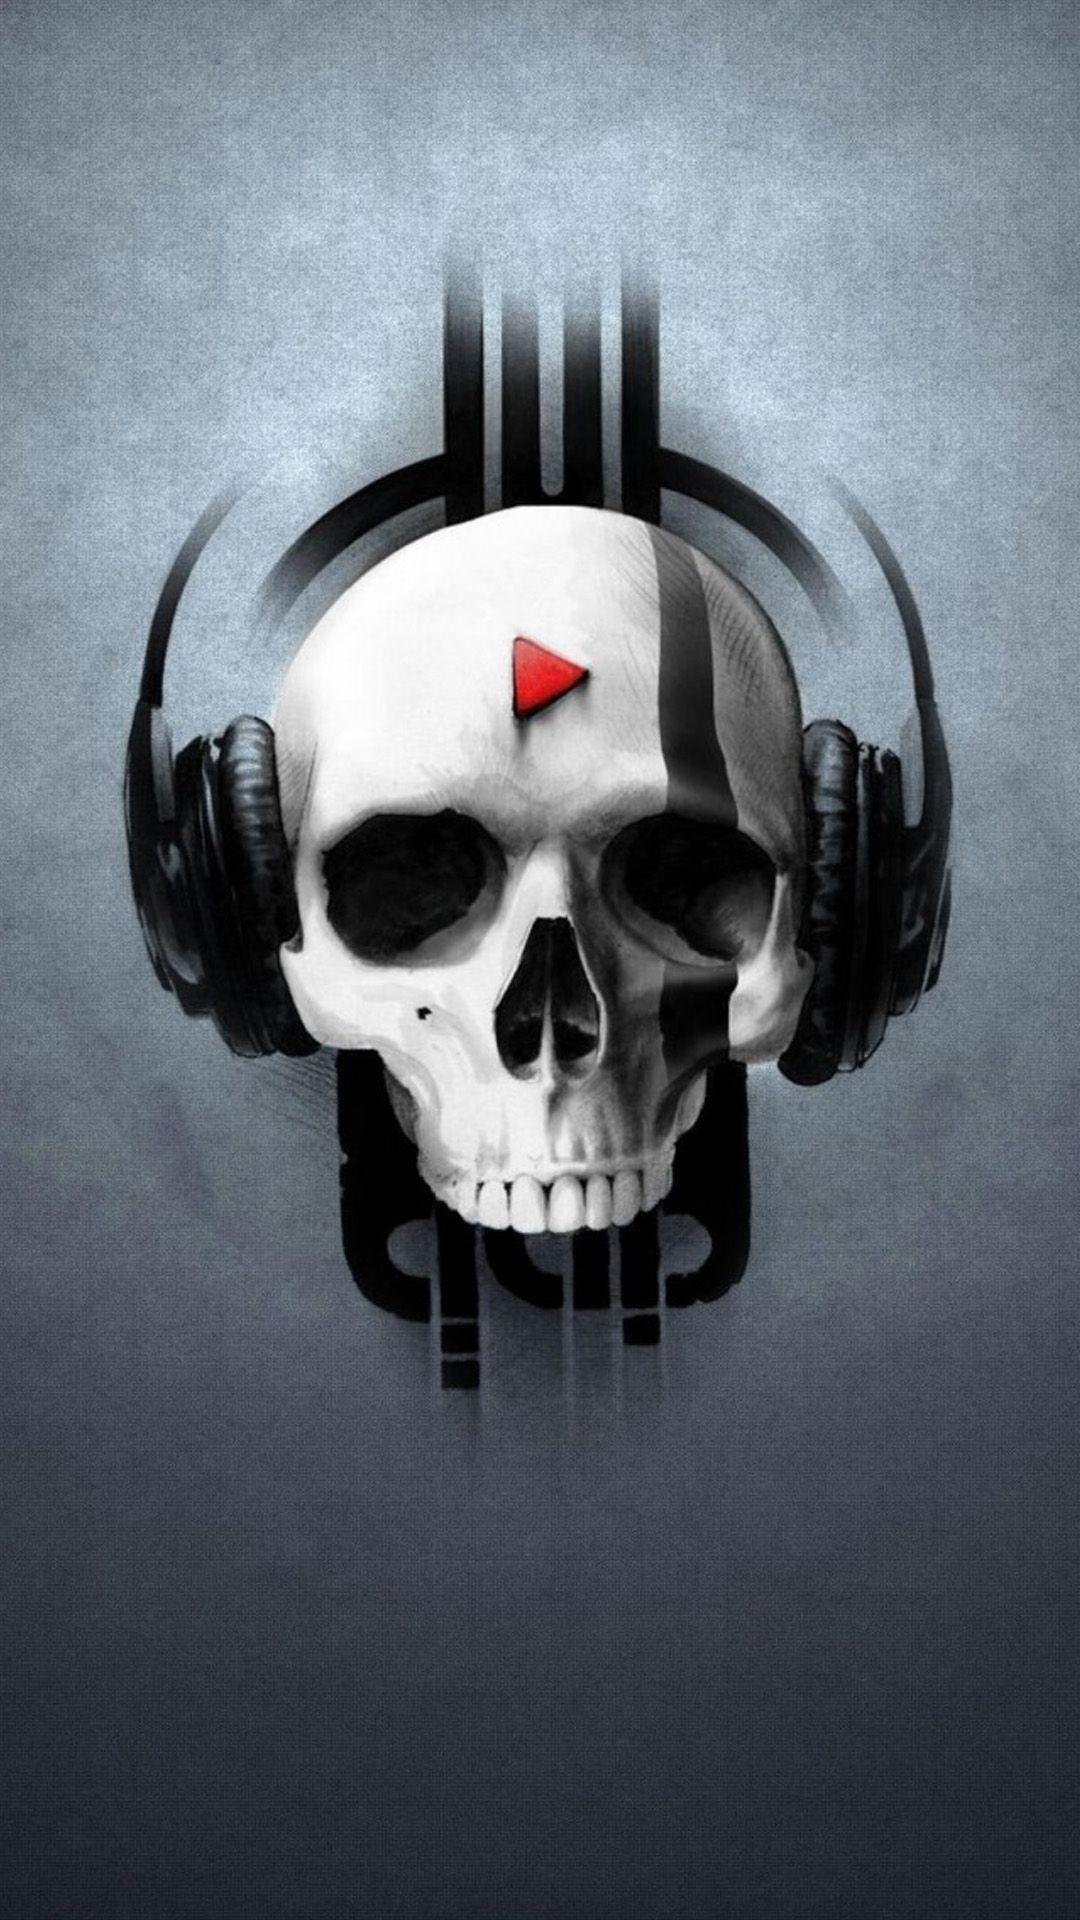 Headphones skull